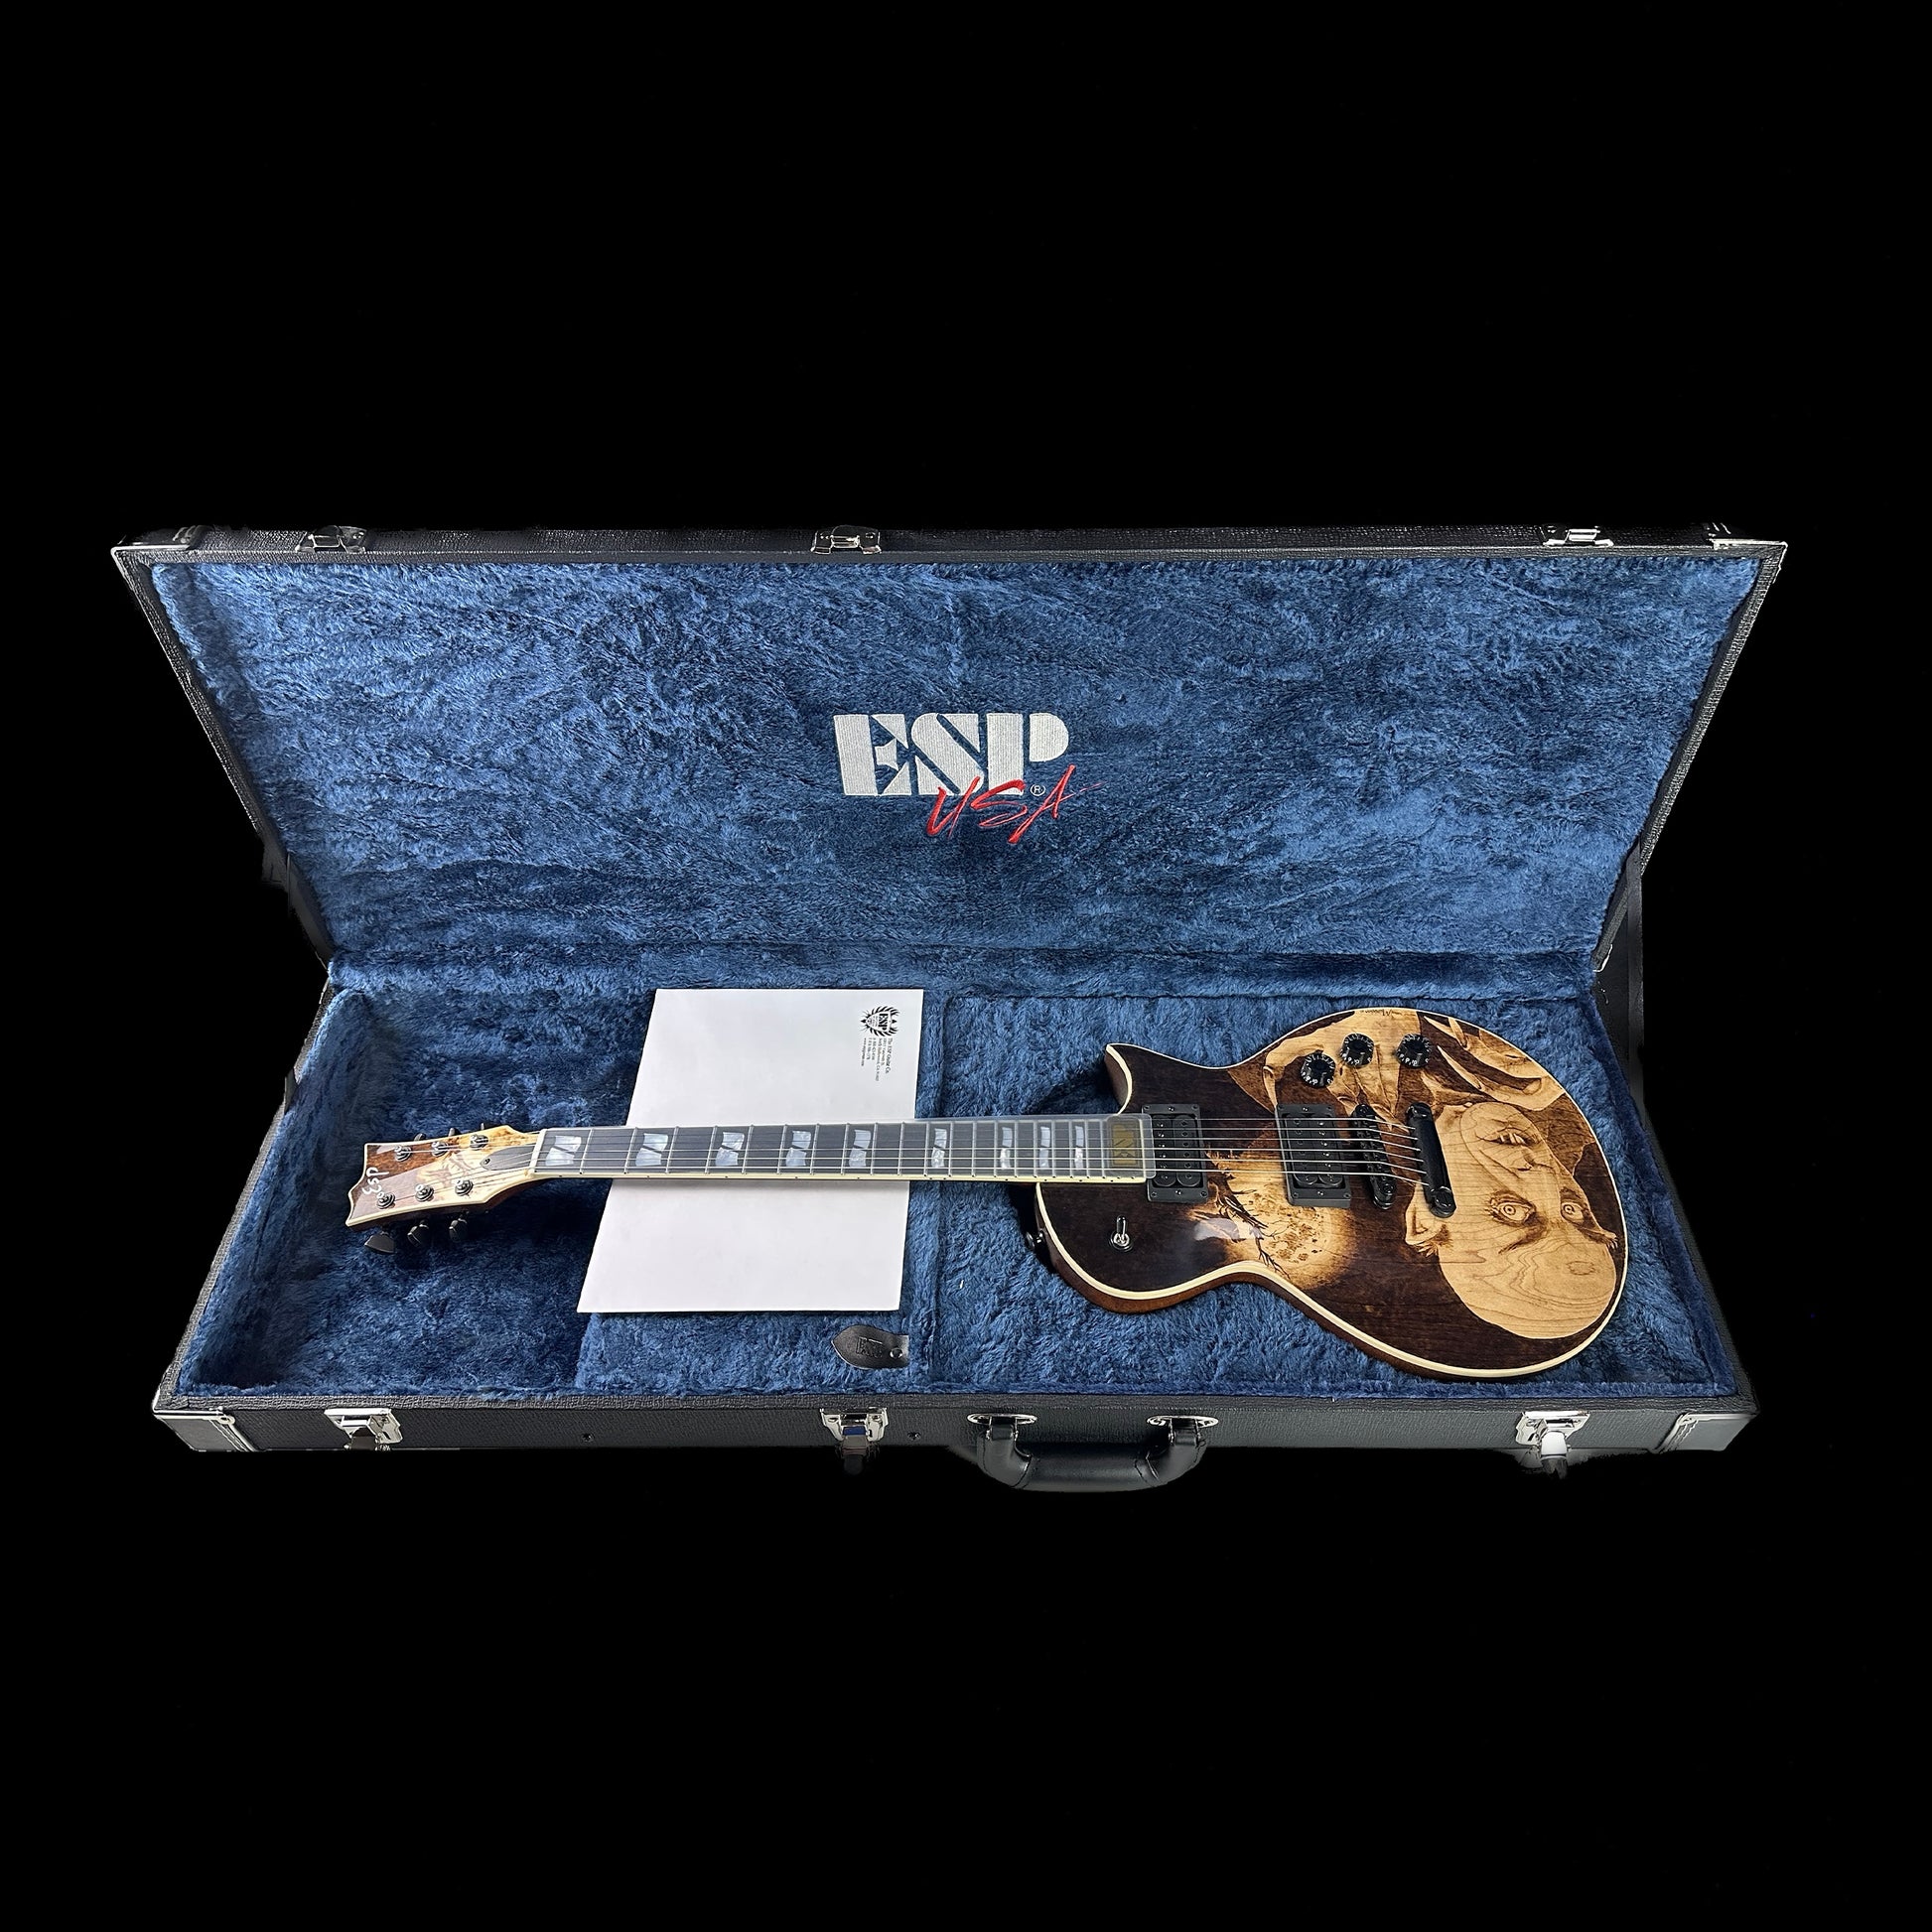 ESP USA Nosferatu Limited Edition Pyrograph Series in case.